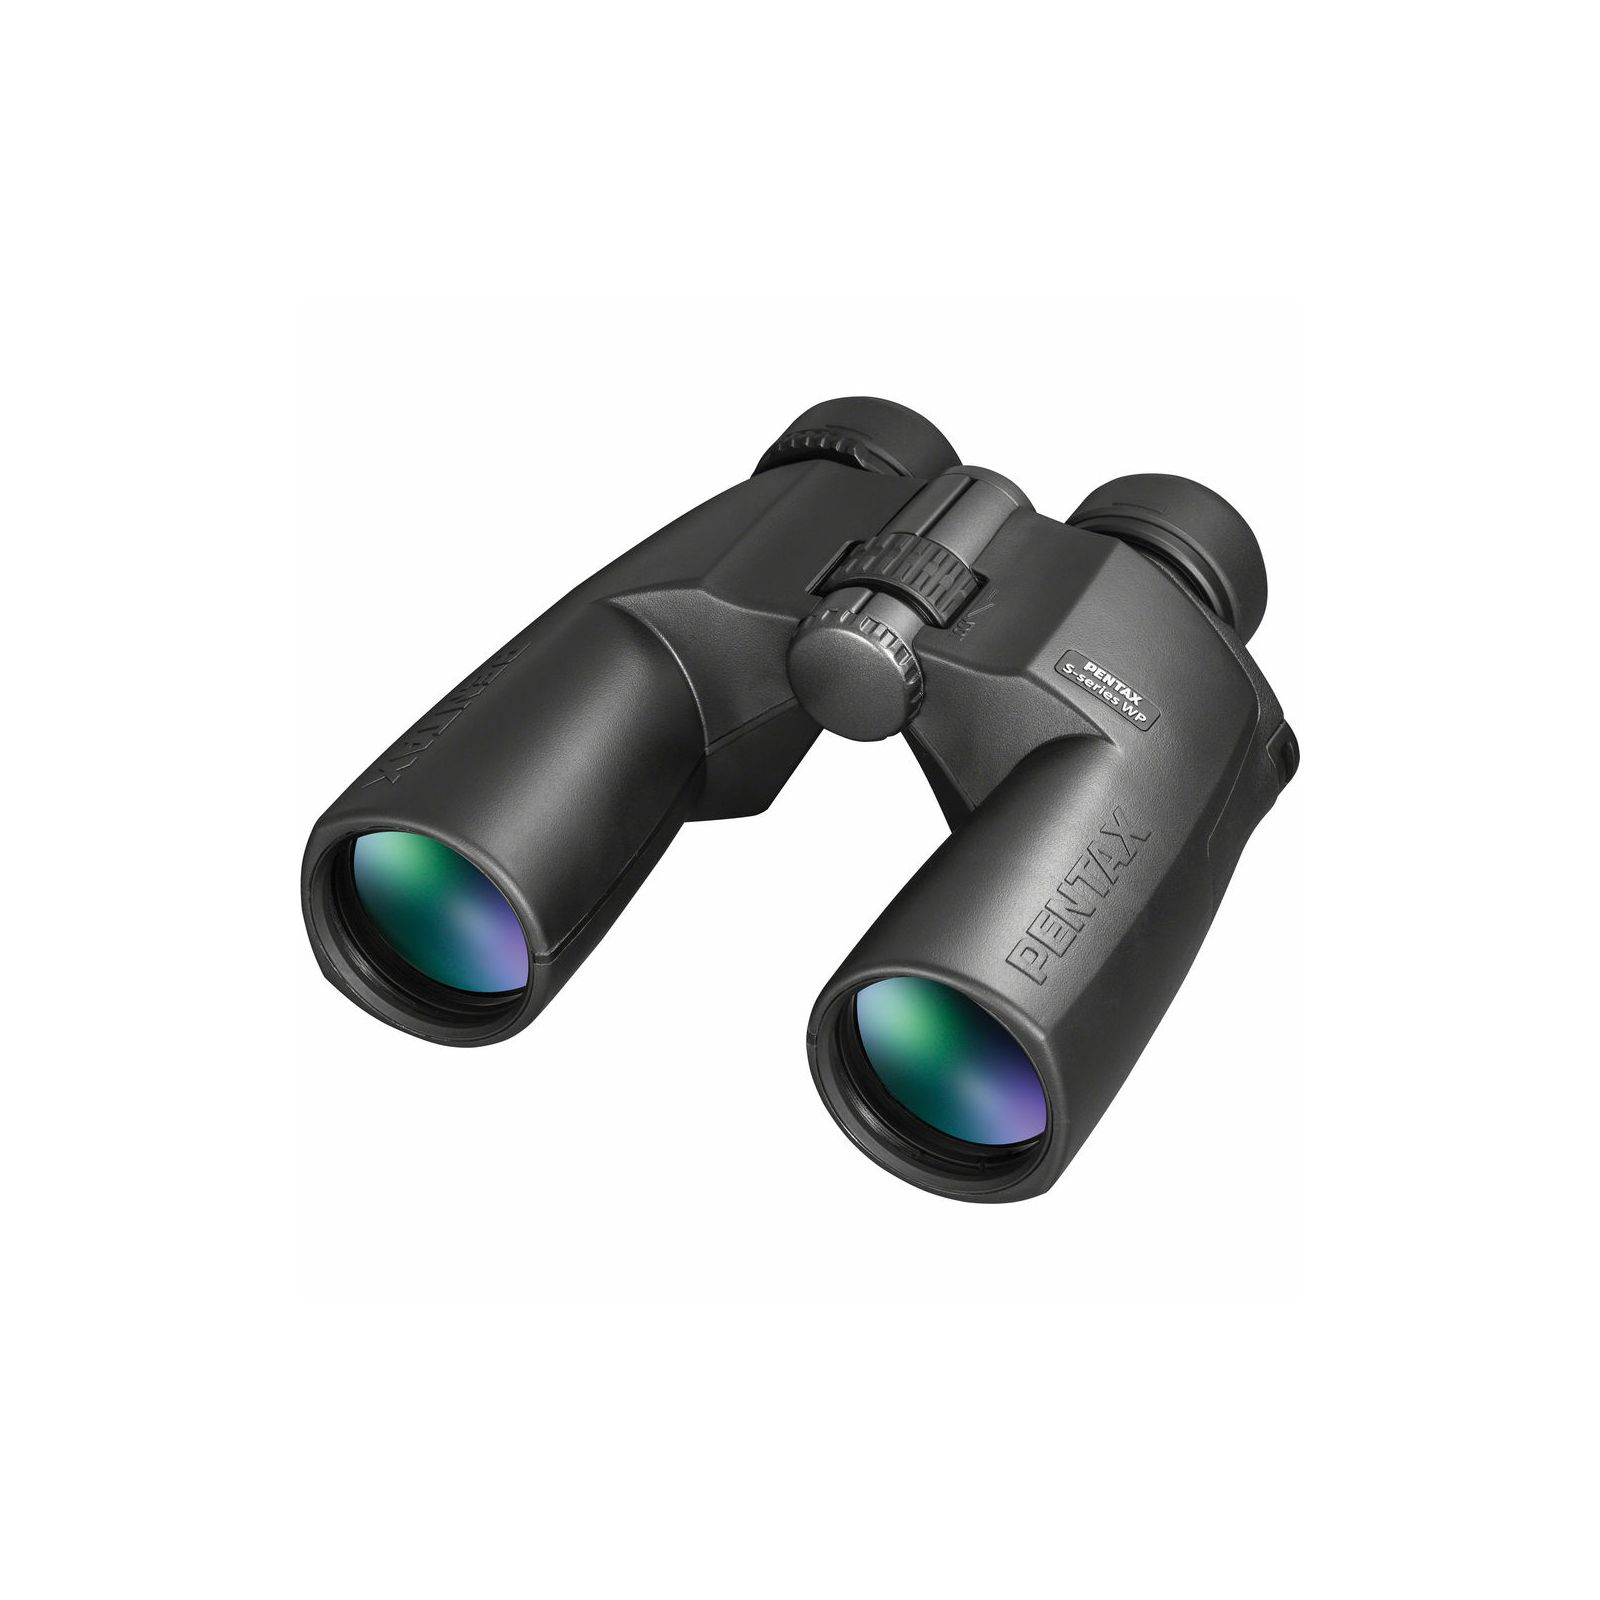 Pentax SP-Superior 10x50 WP S serija dvogled dalekozor binocular